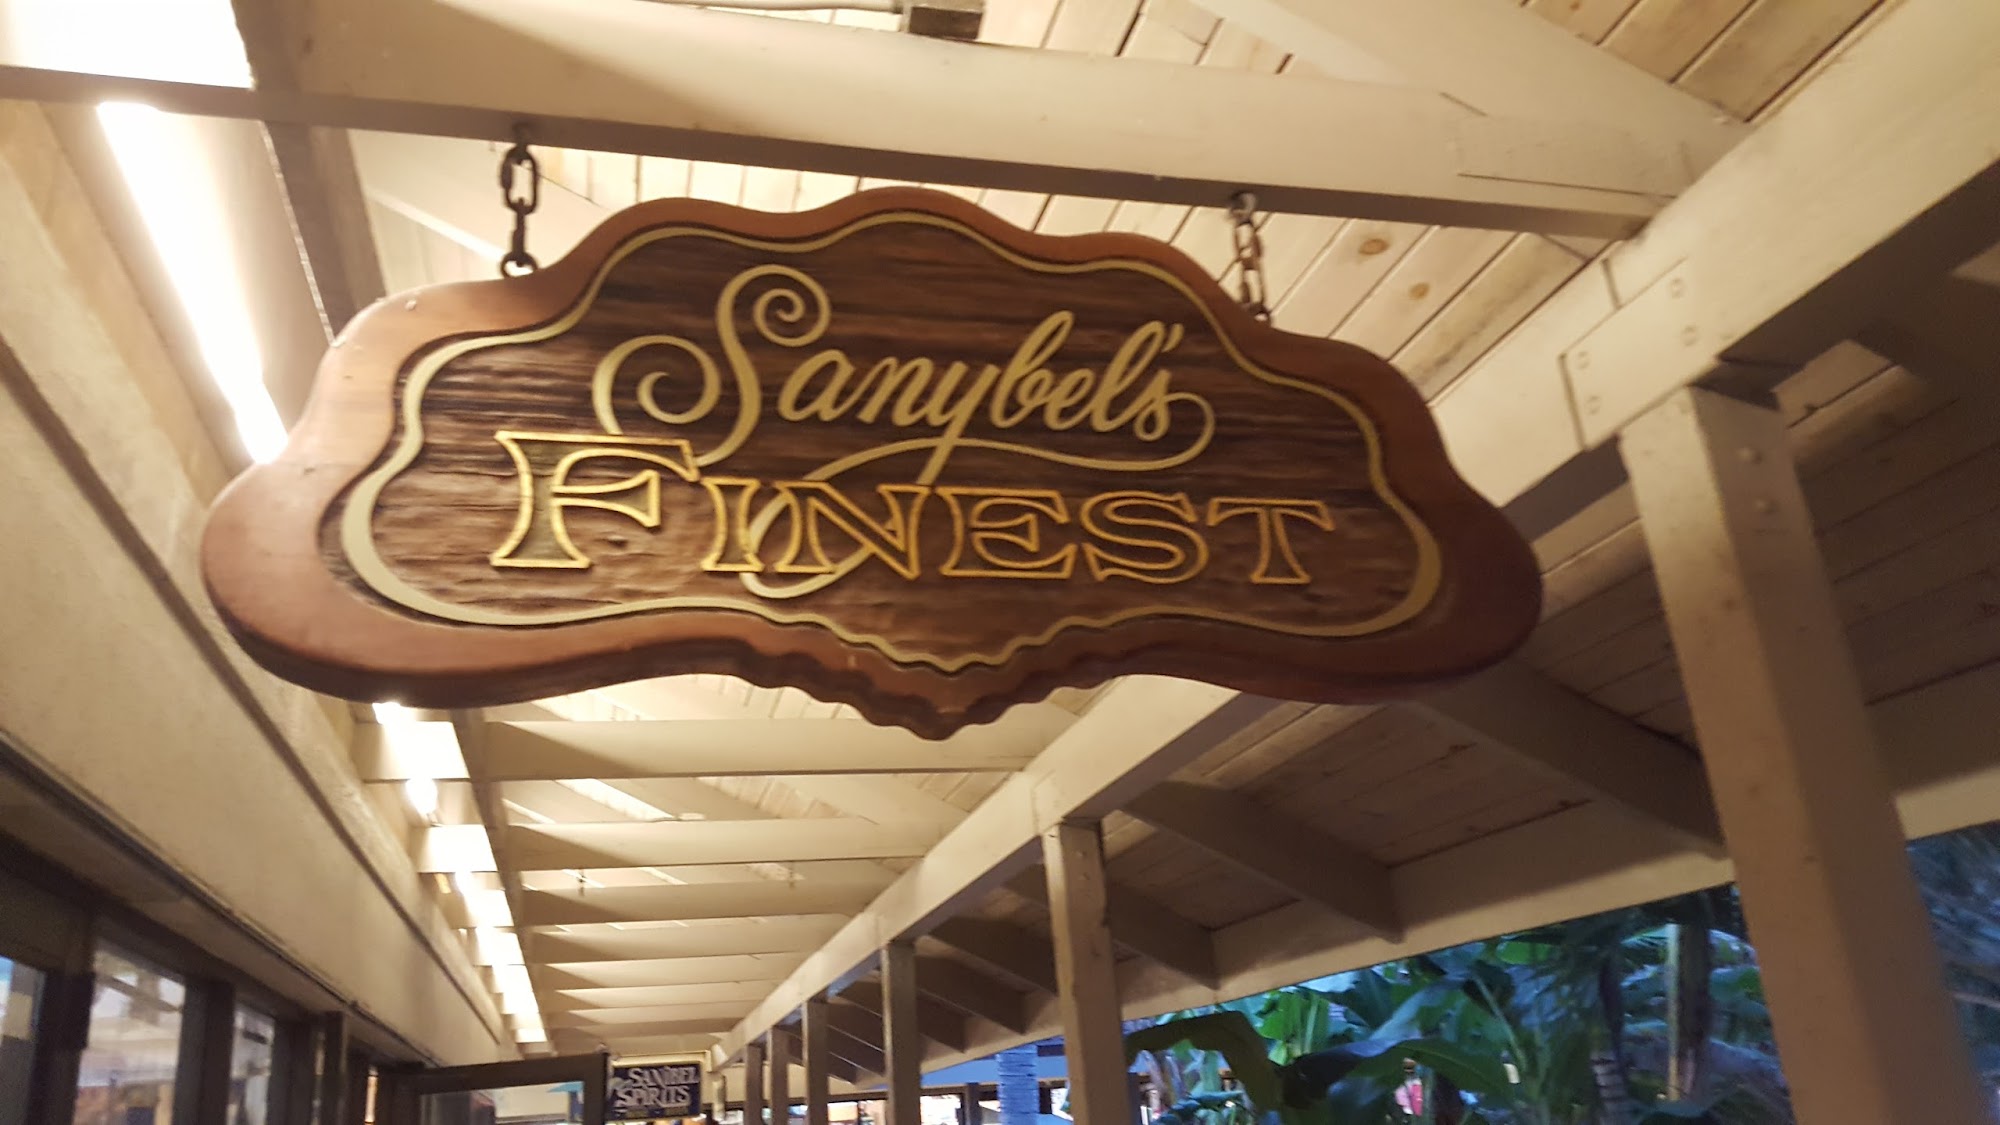 Sanybel's Finest